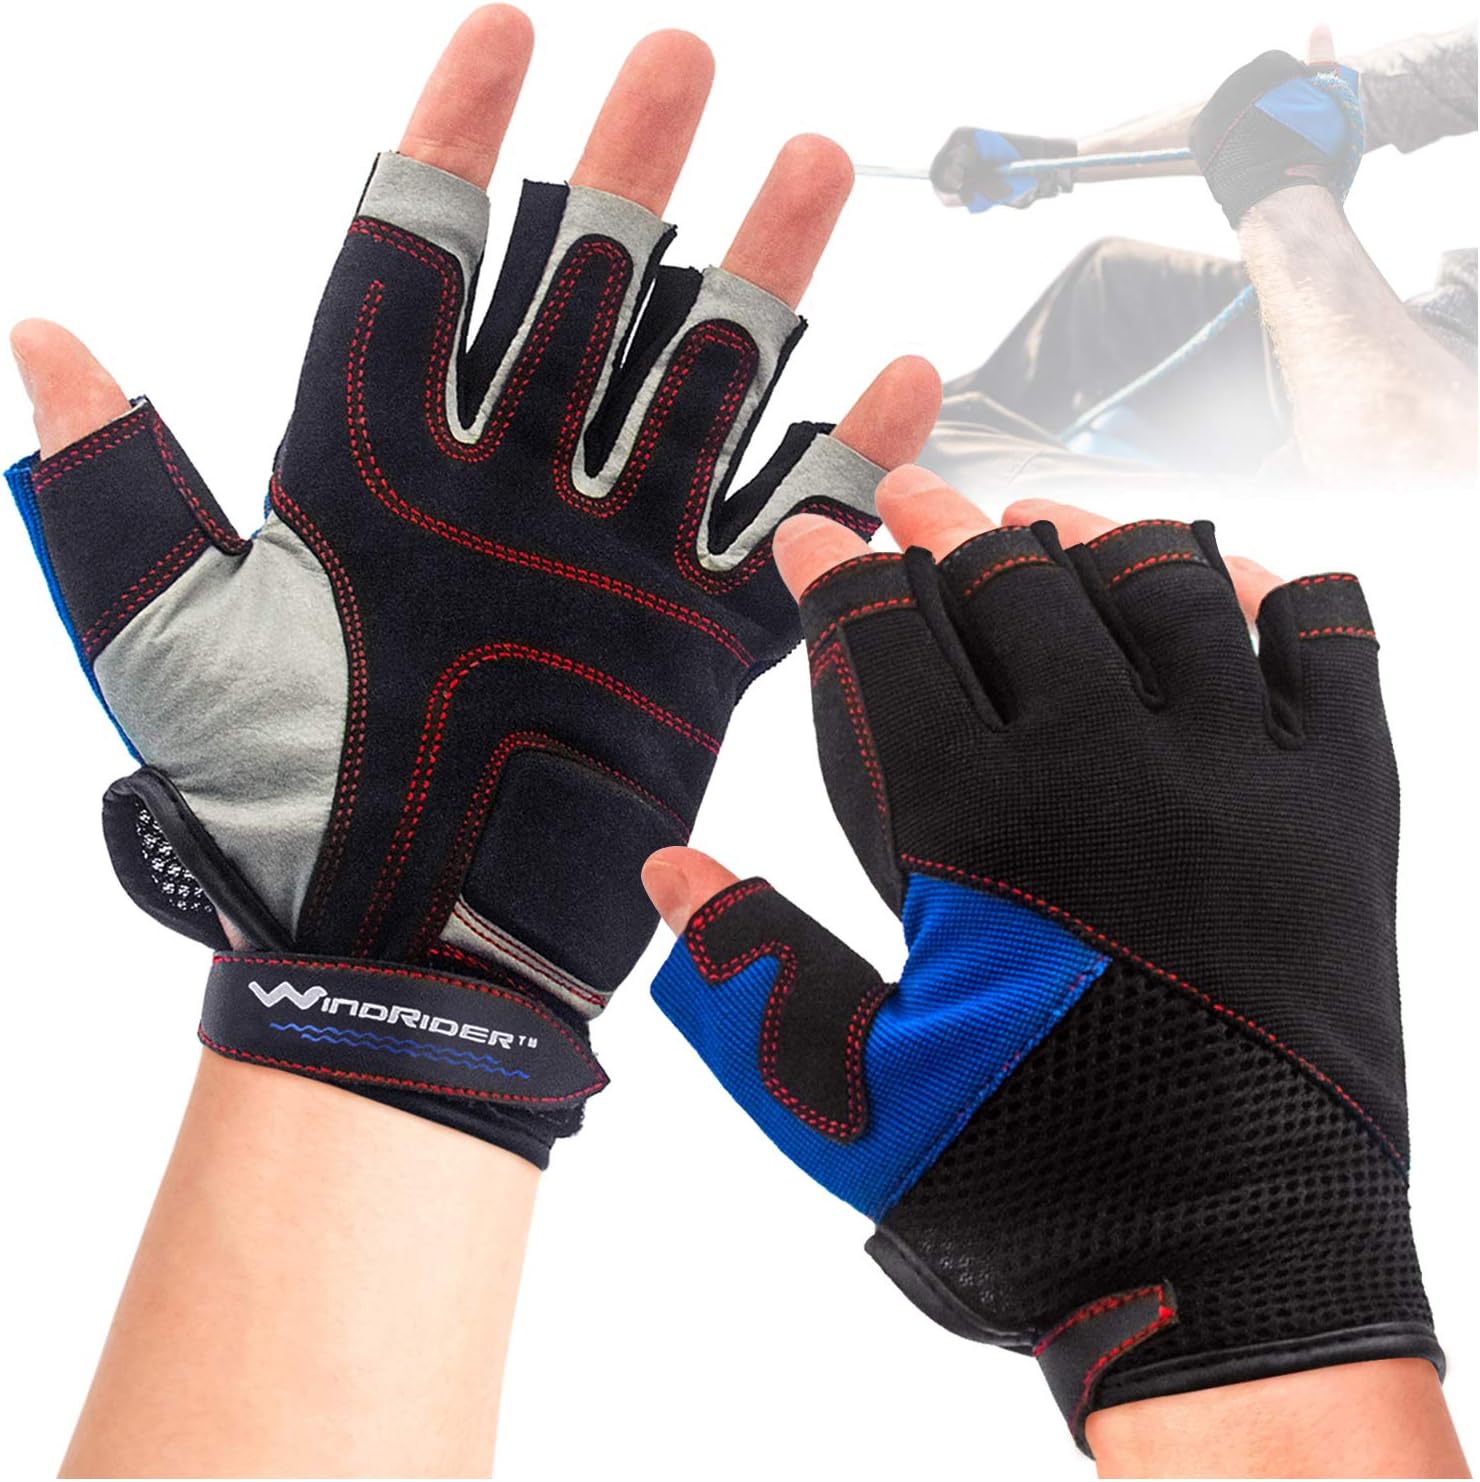 Windrider Pro Best Sailing Gloves